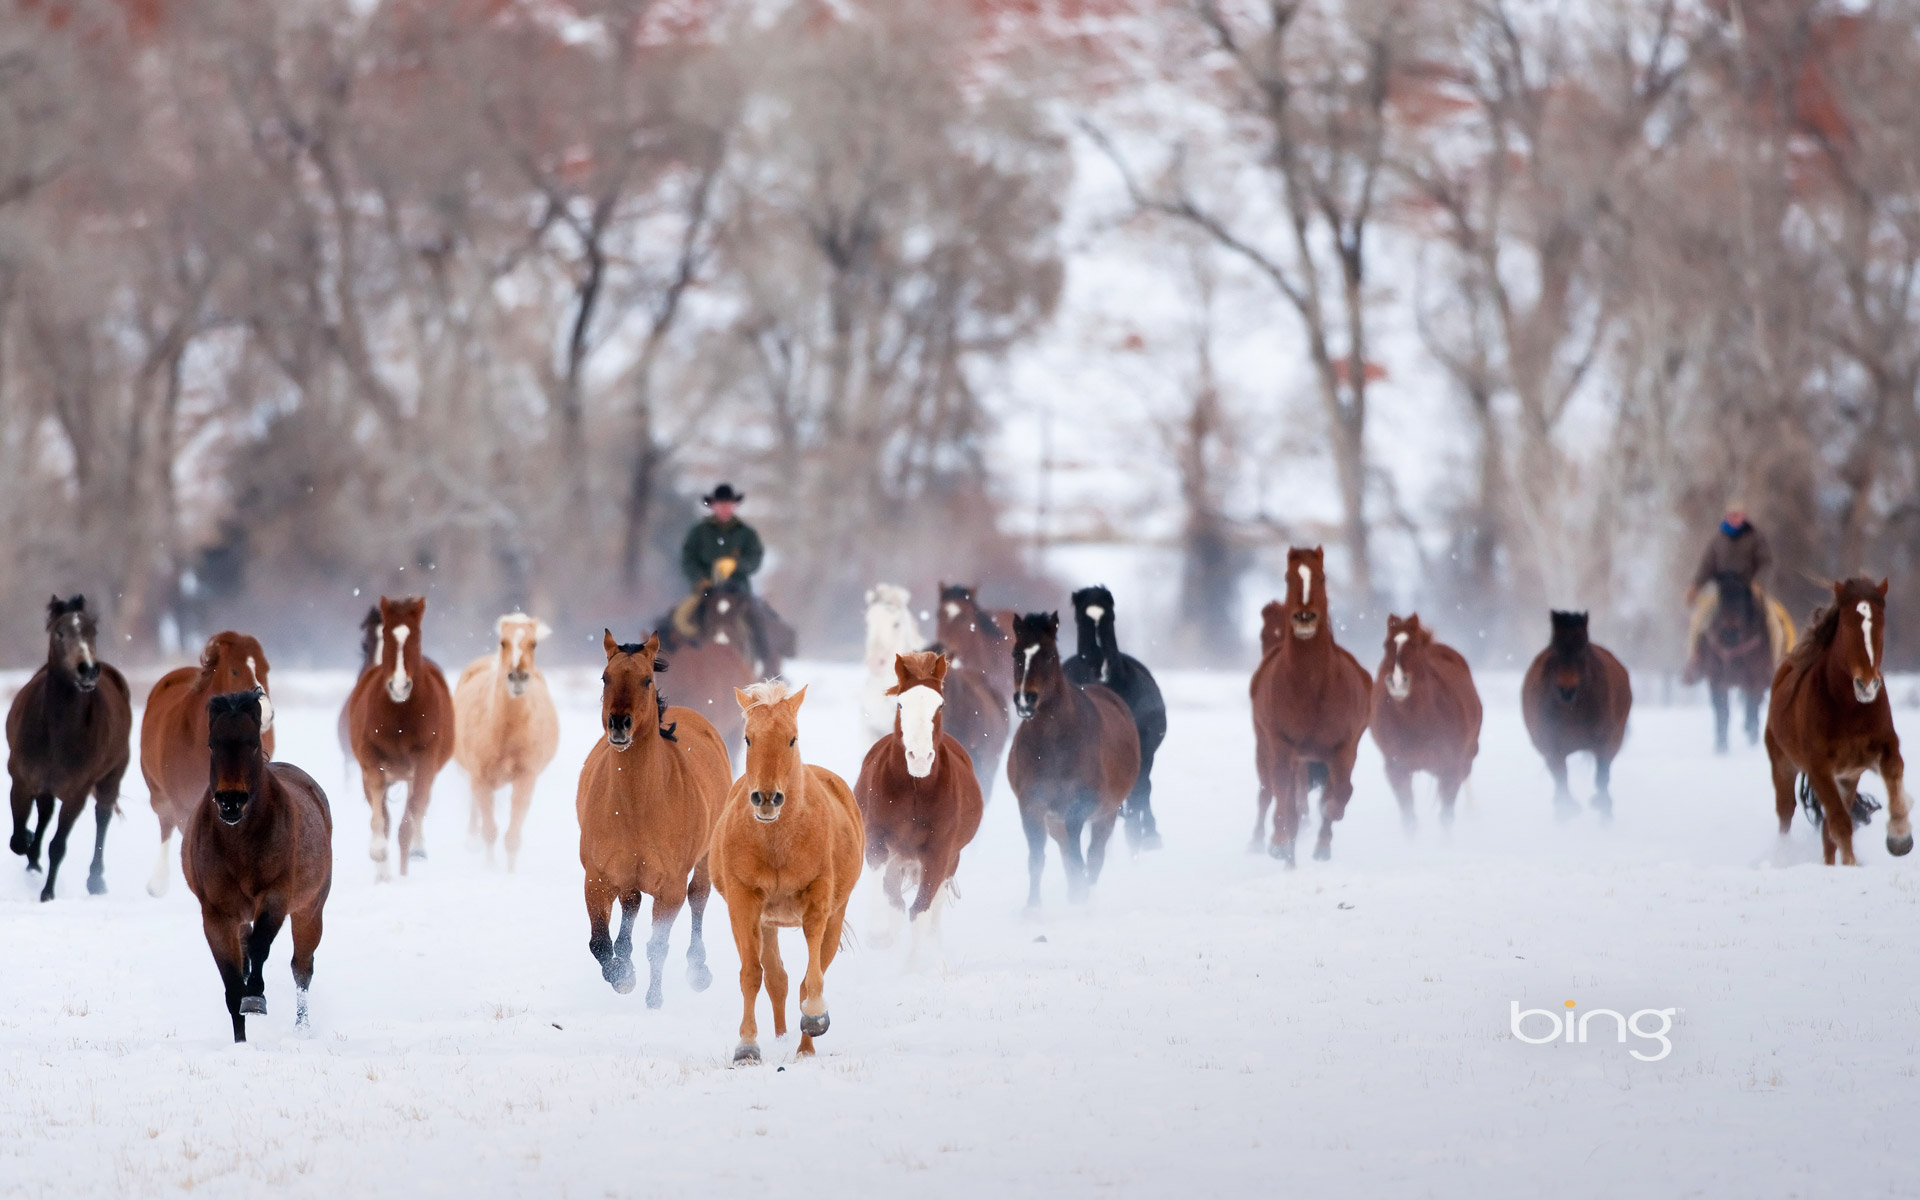 Winter Horses Bing Wallpaper by Phebomenon on